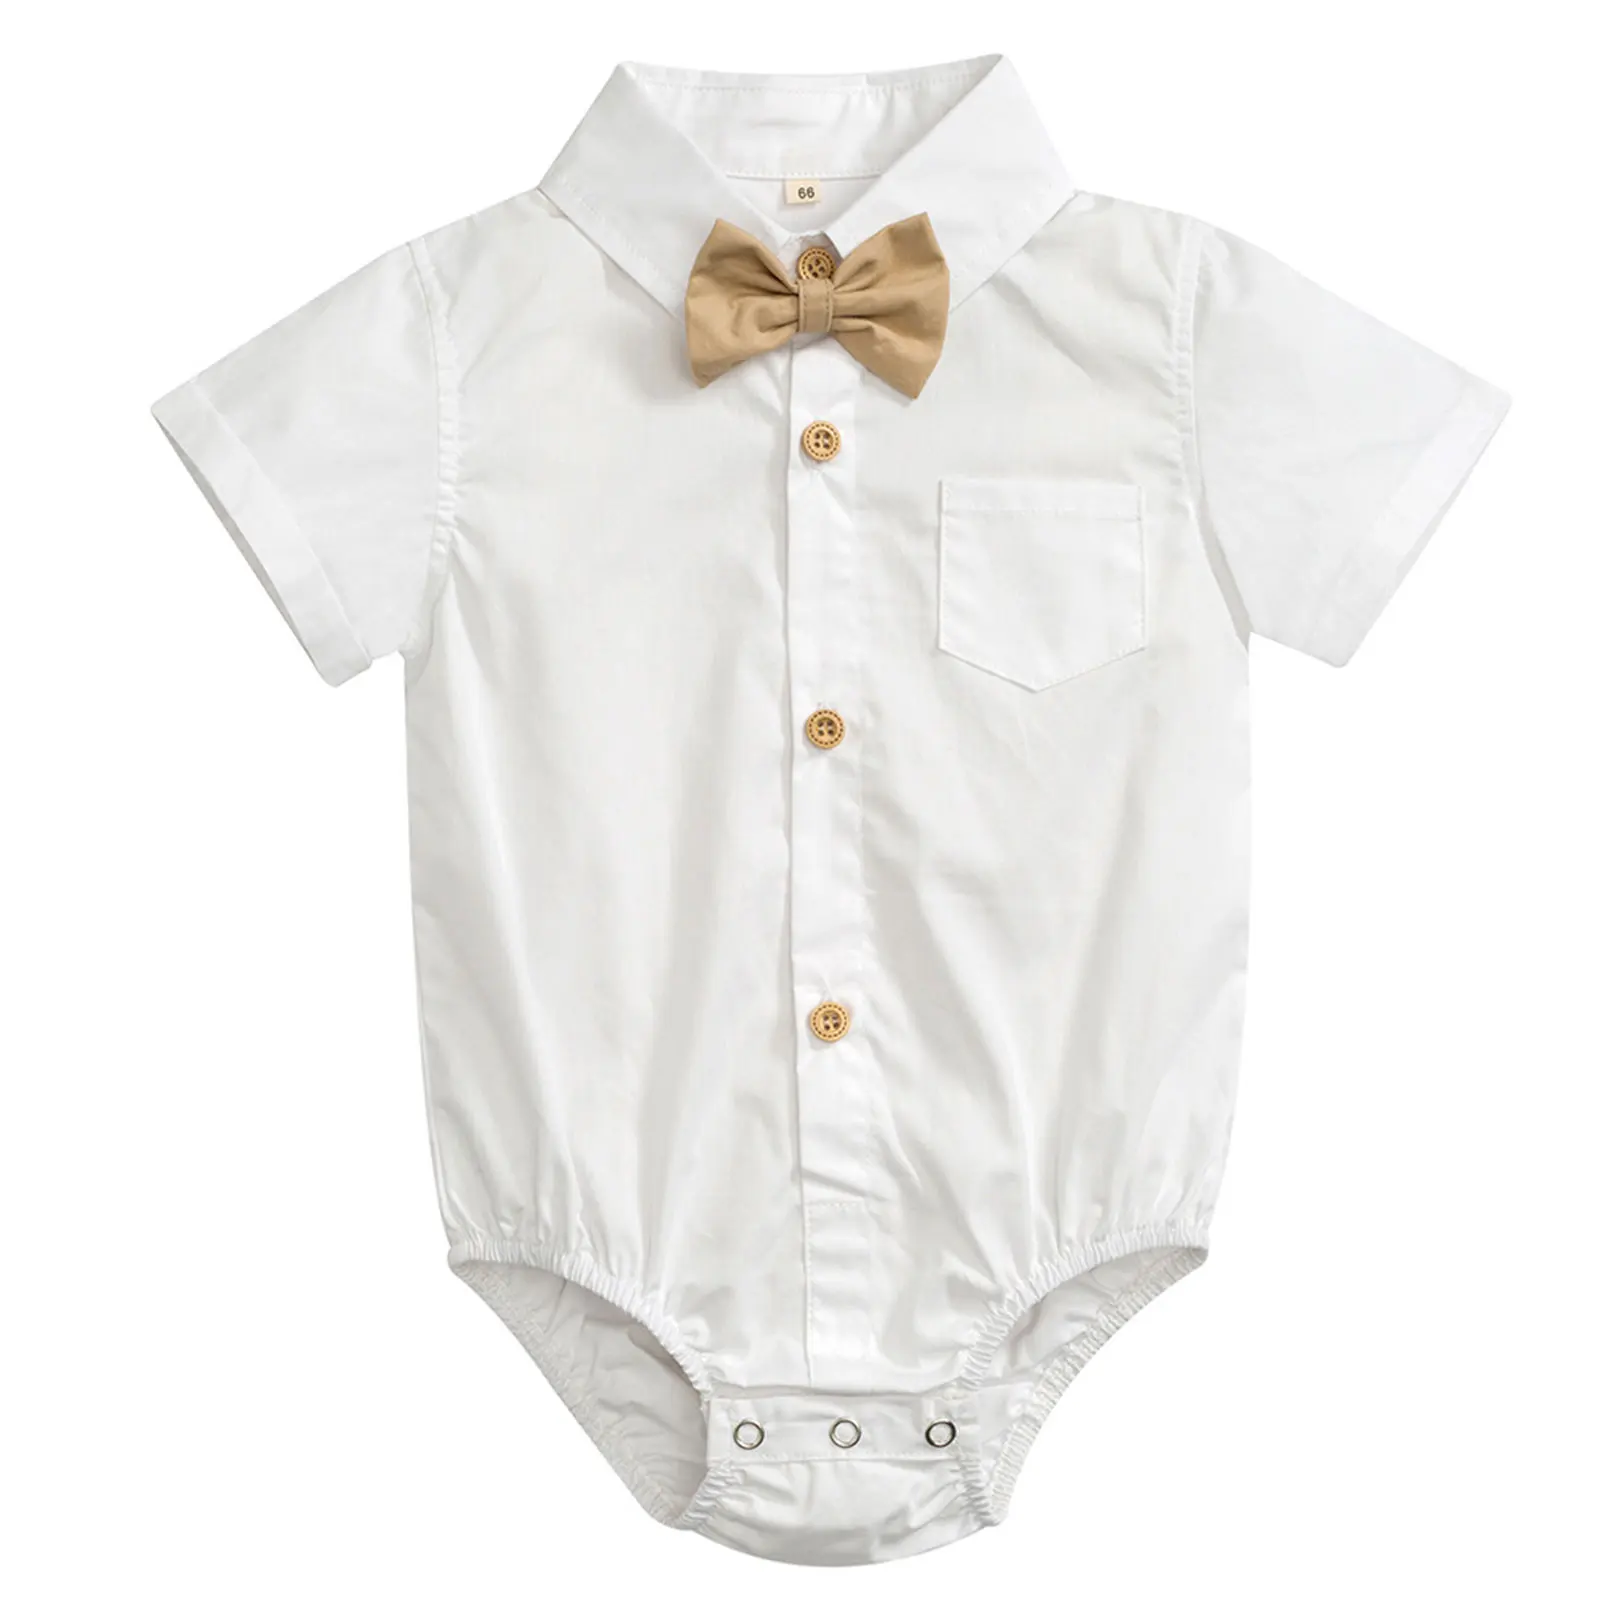 

Infant Baby Boys Gentleman Formal Dress Shirt Romper Party Summer Clothes Short Sleeve Shirt Collar Bow Tie Buttons Bodysuit